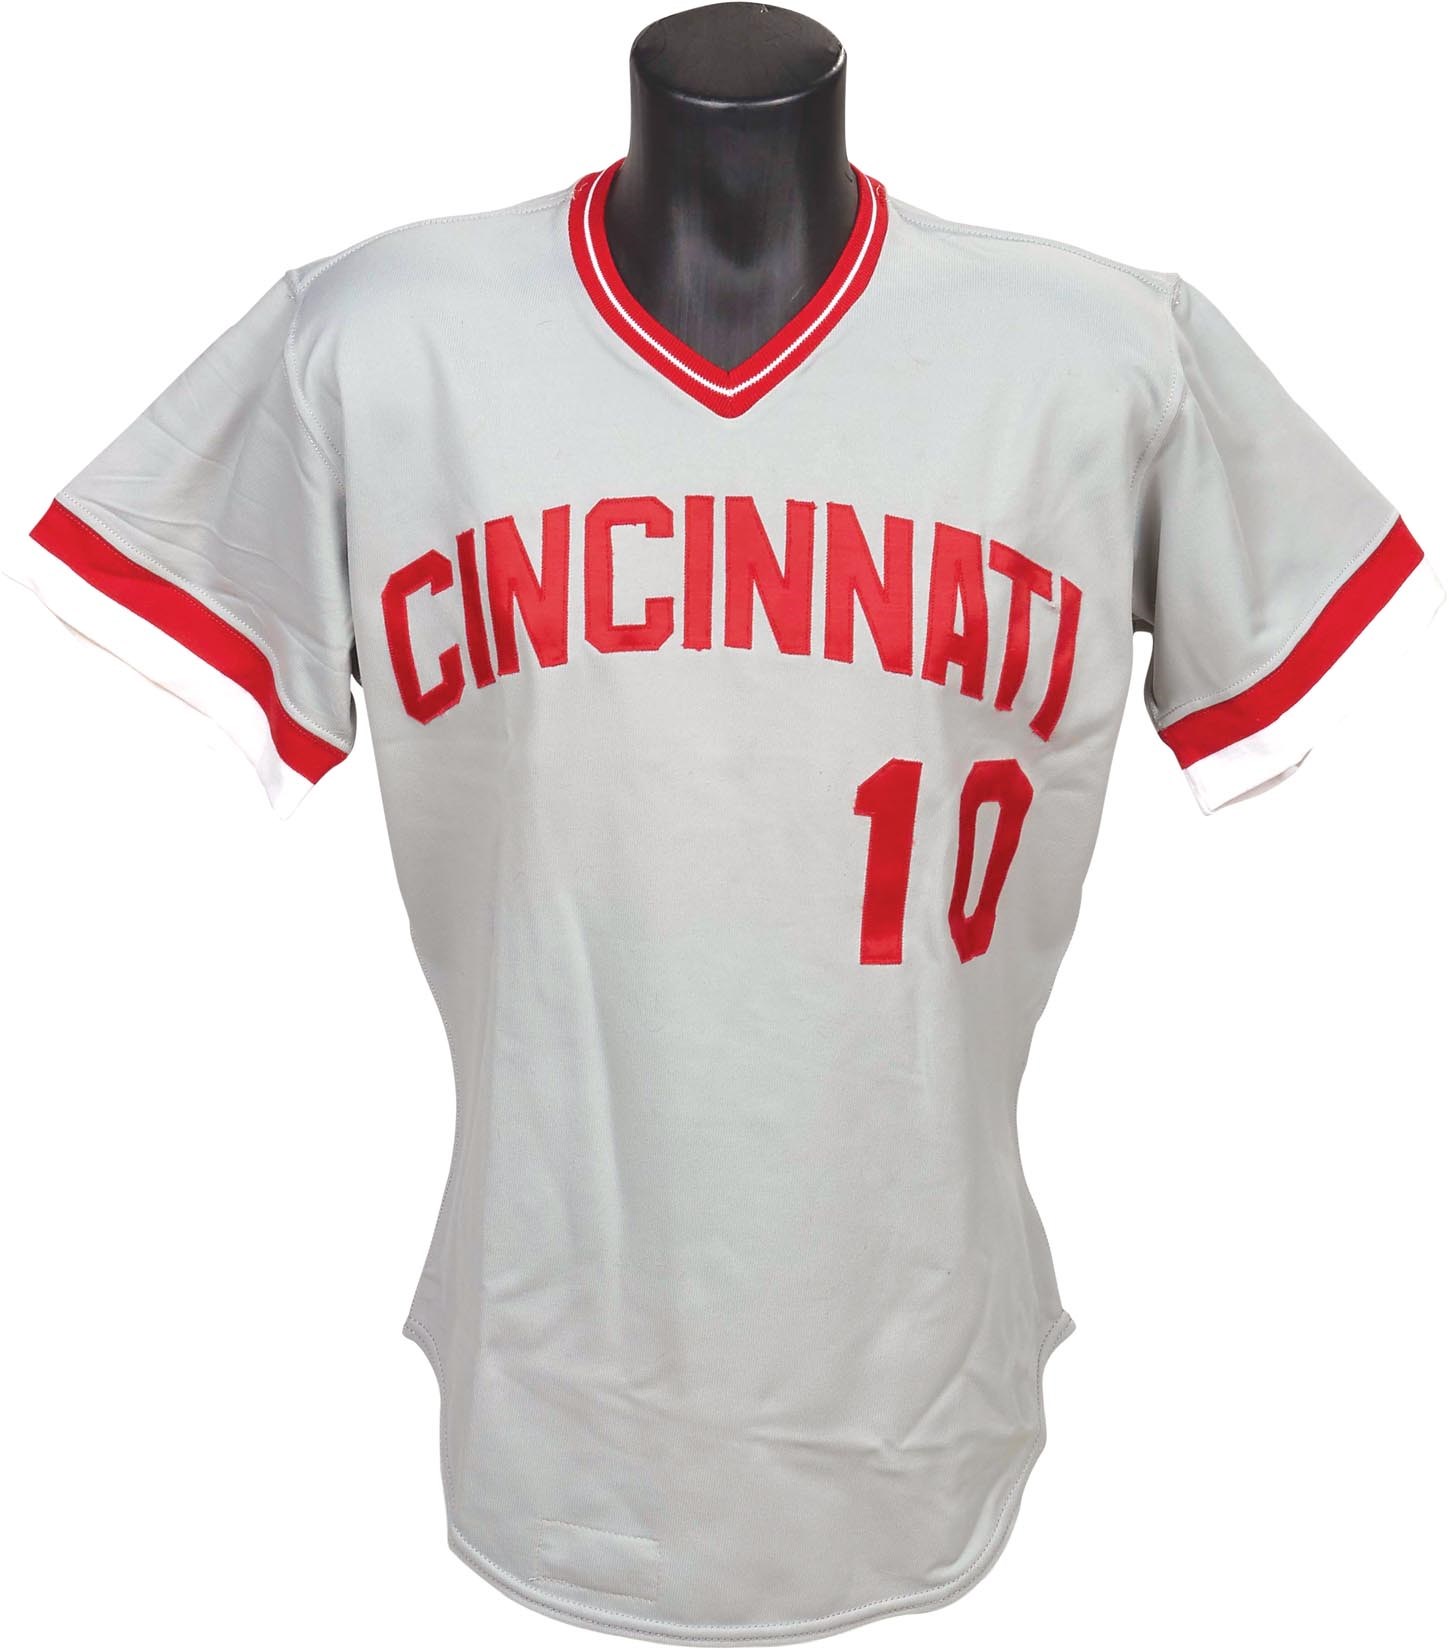 Bernie Stowe Cincinnati Reds Collection - 1978 Sparky Anderson Cincinnati Reds Tour of Japan Game Worn Uniform